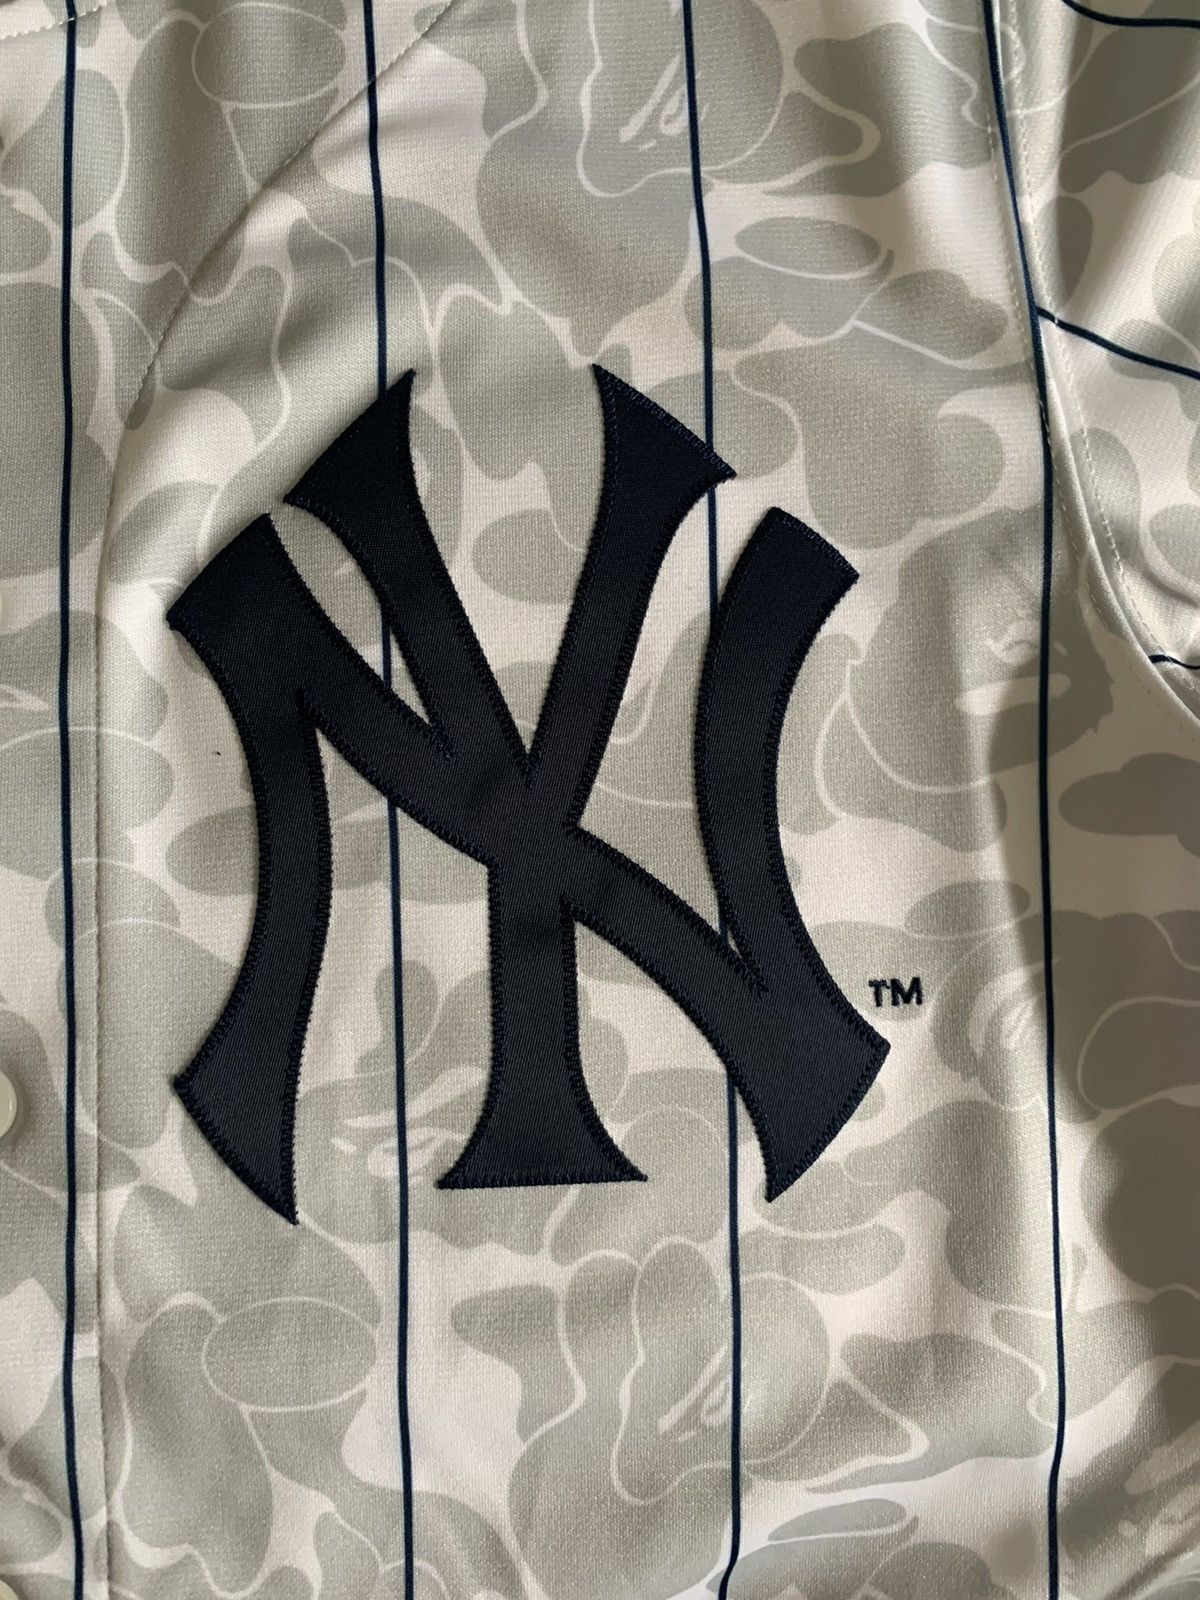 Bape Bape x Mitchell & Ness Yankees Jersey Size US S / EU 44-46 / 1 - 3 Thumbnail